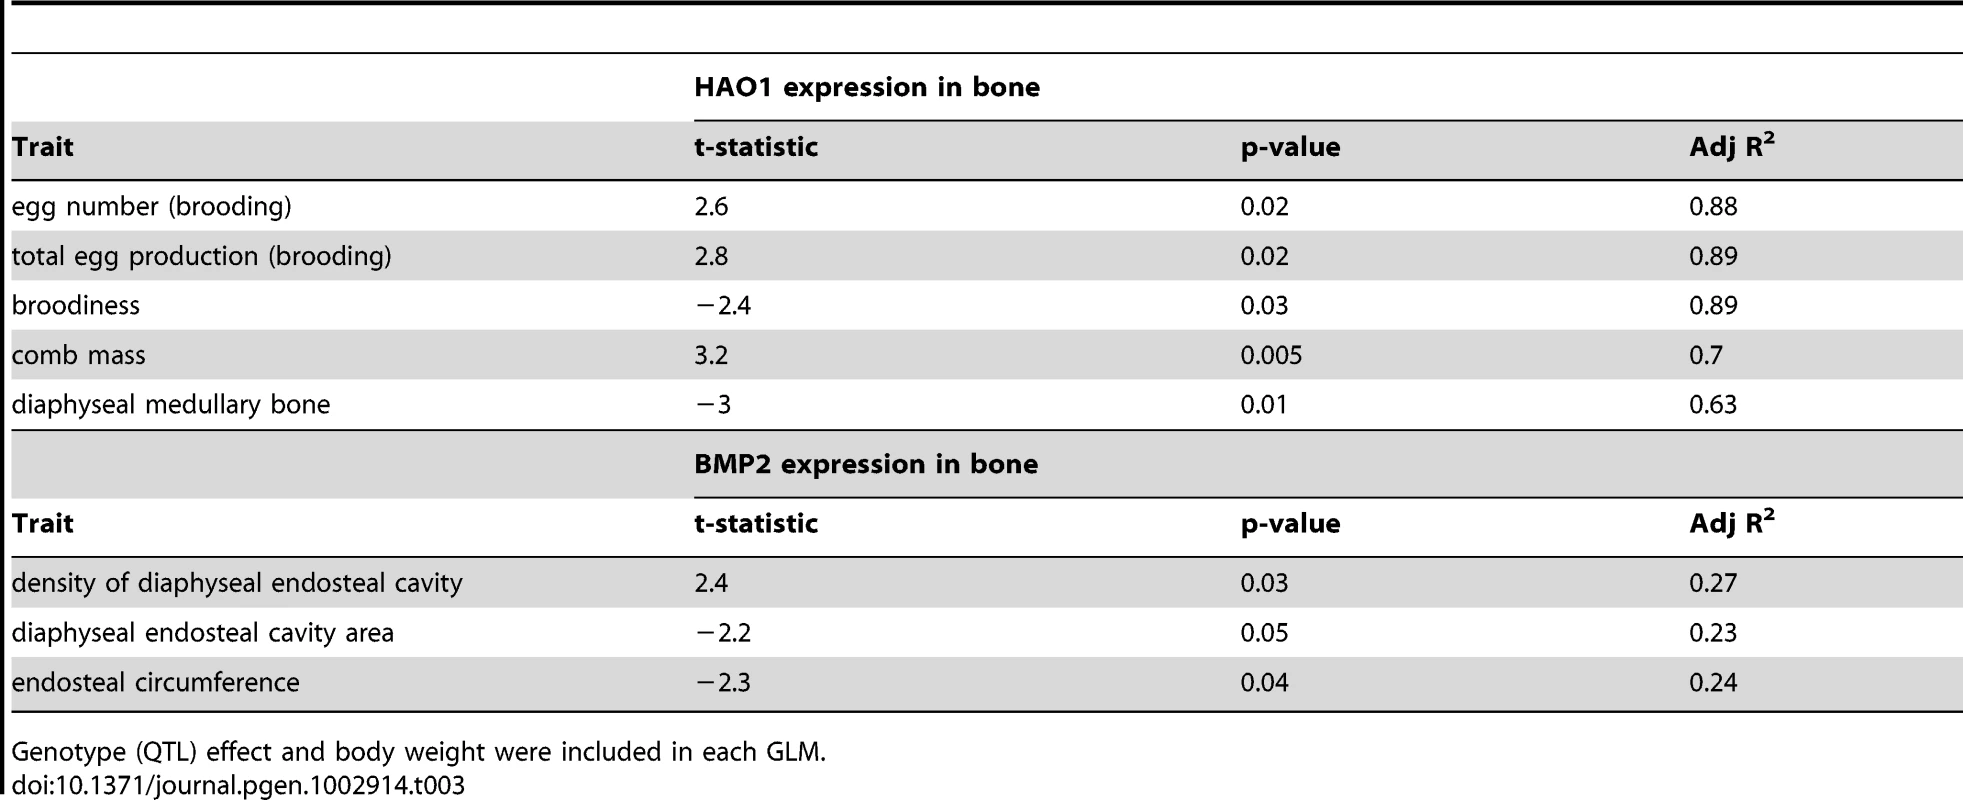 Additional fecundity and bone morphometric traits correlated with <i>HAO1</i> and <i>BMP2</i> expression in bone samples.